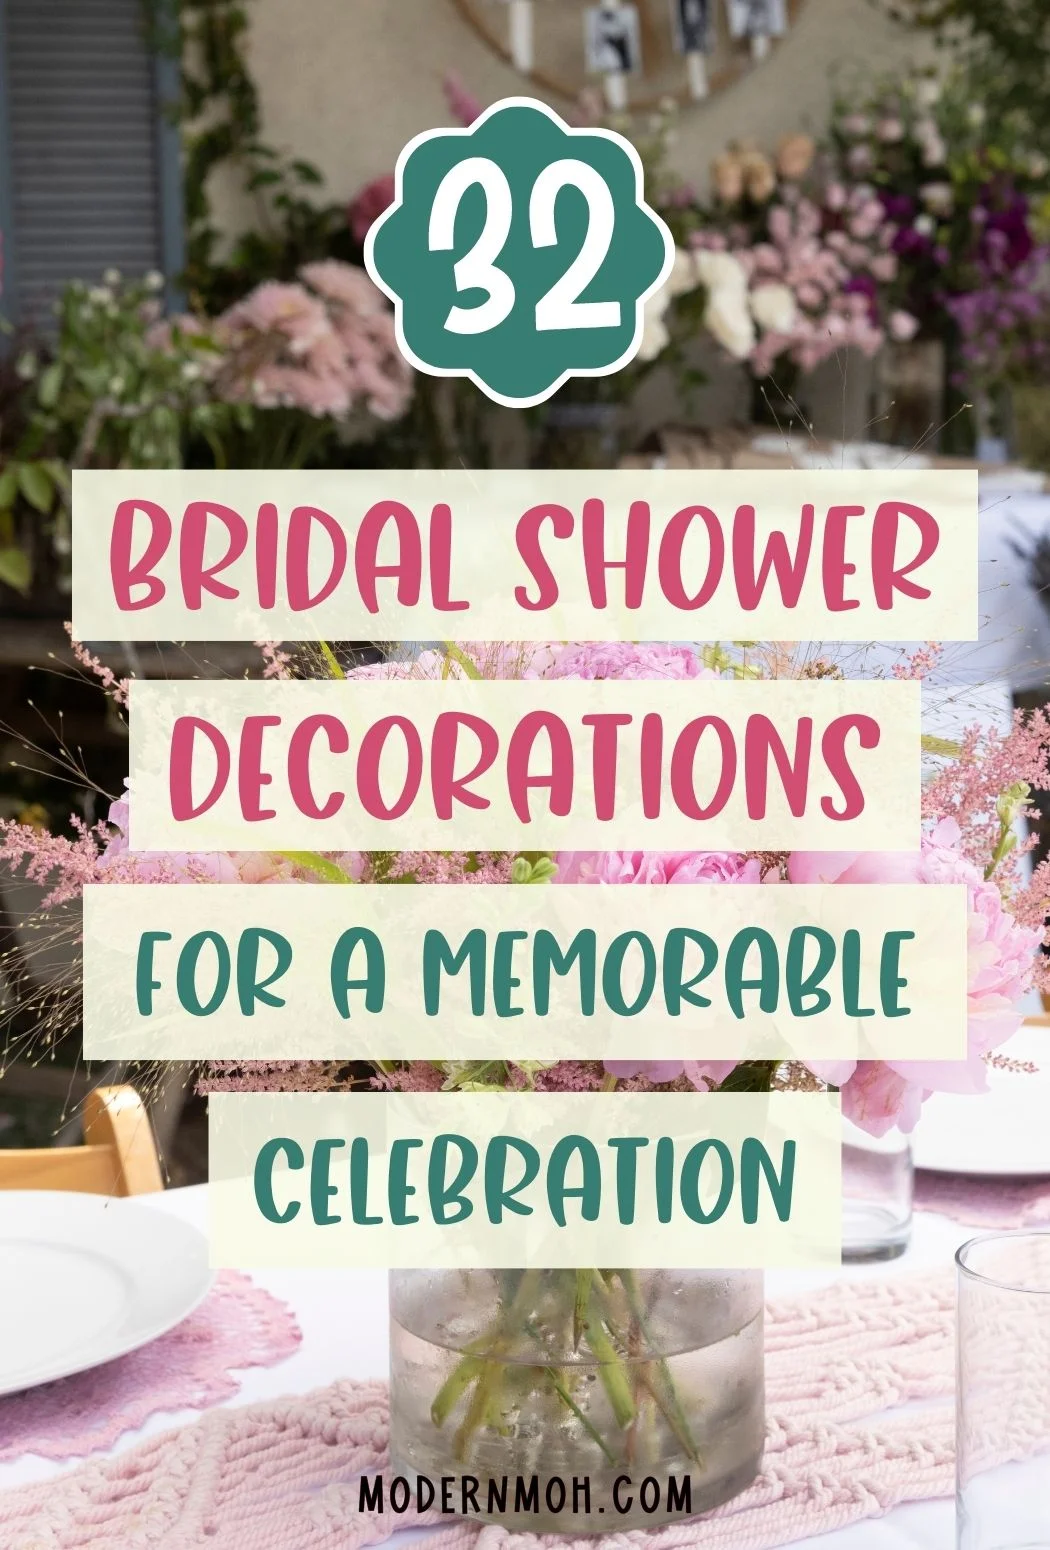 https://modernmoh.com/wp-content/uploads/2020/10/bridal-shower-decorations-pin.jpg